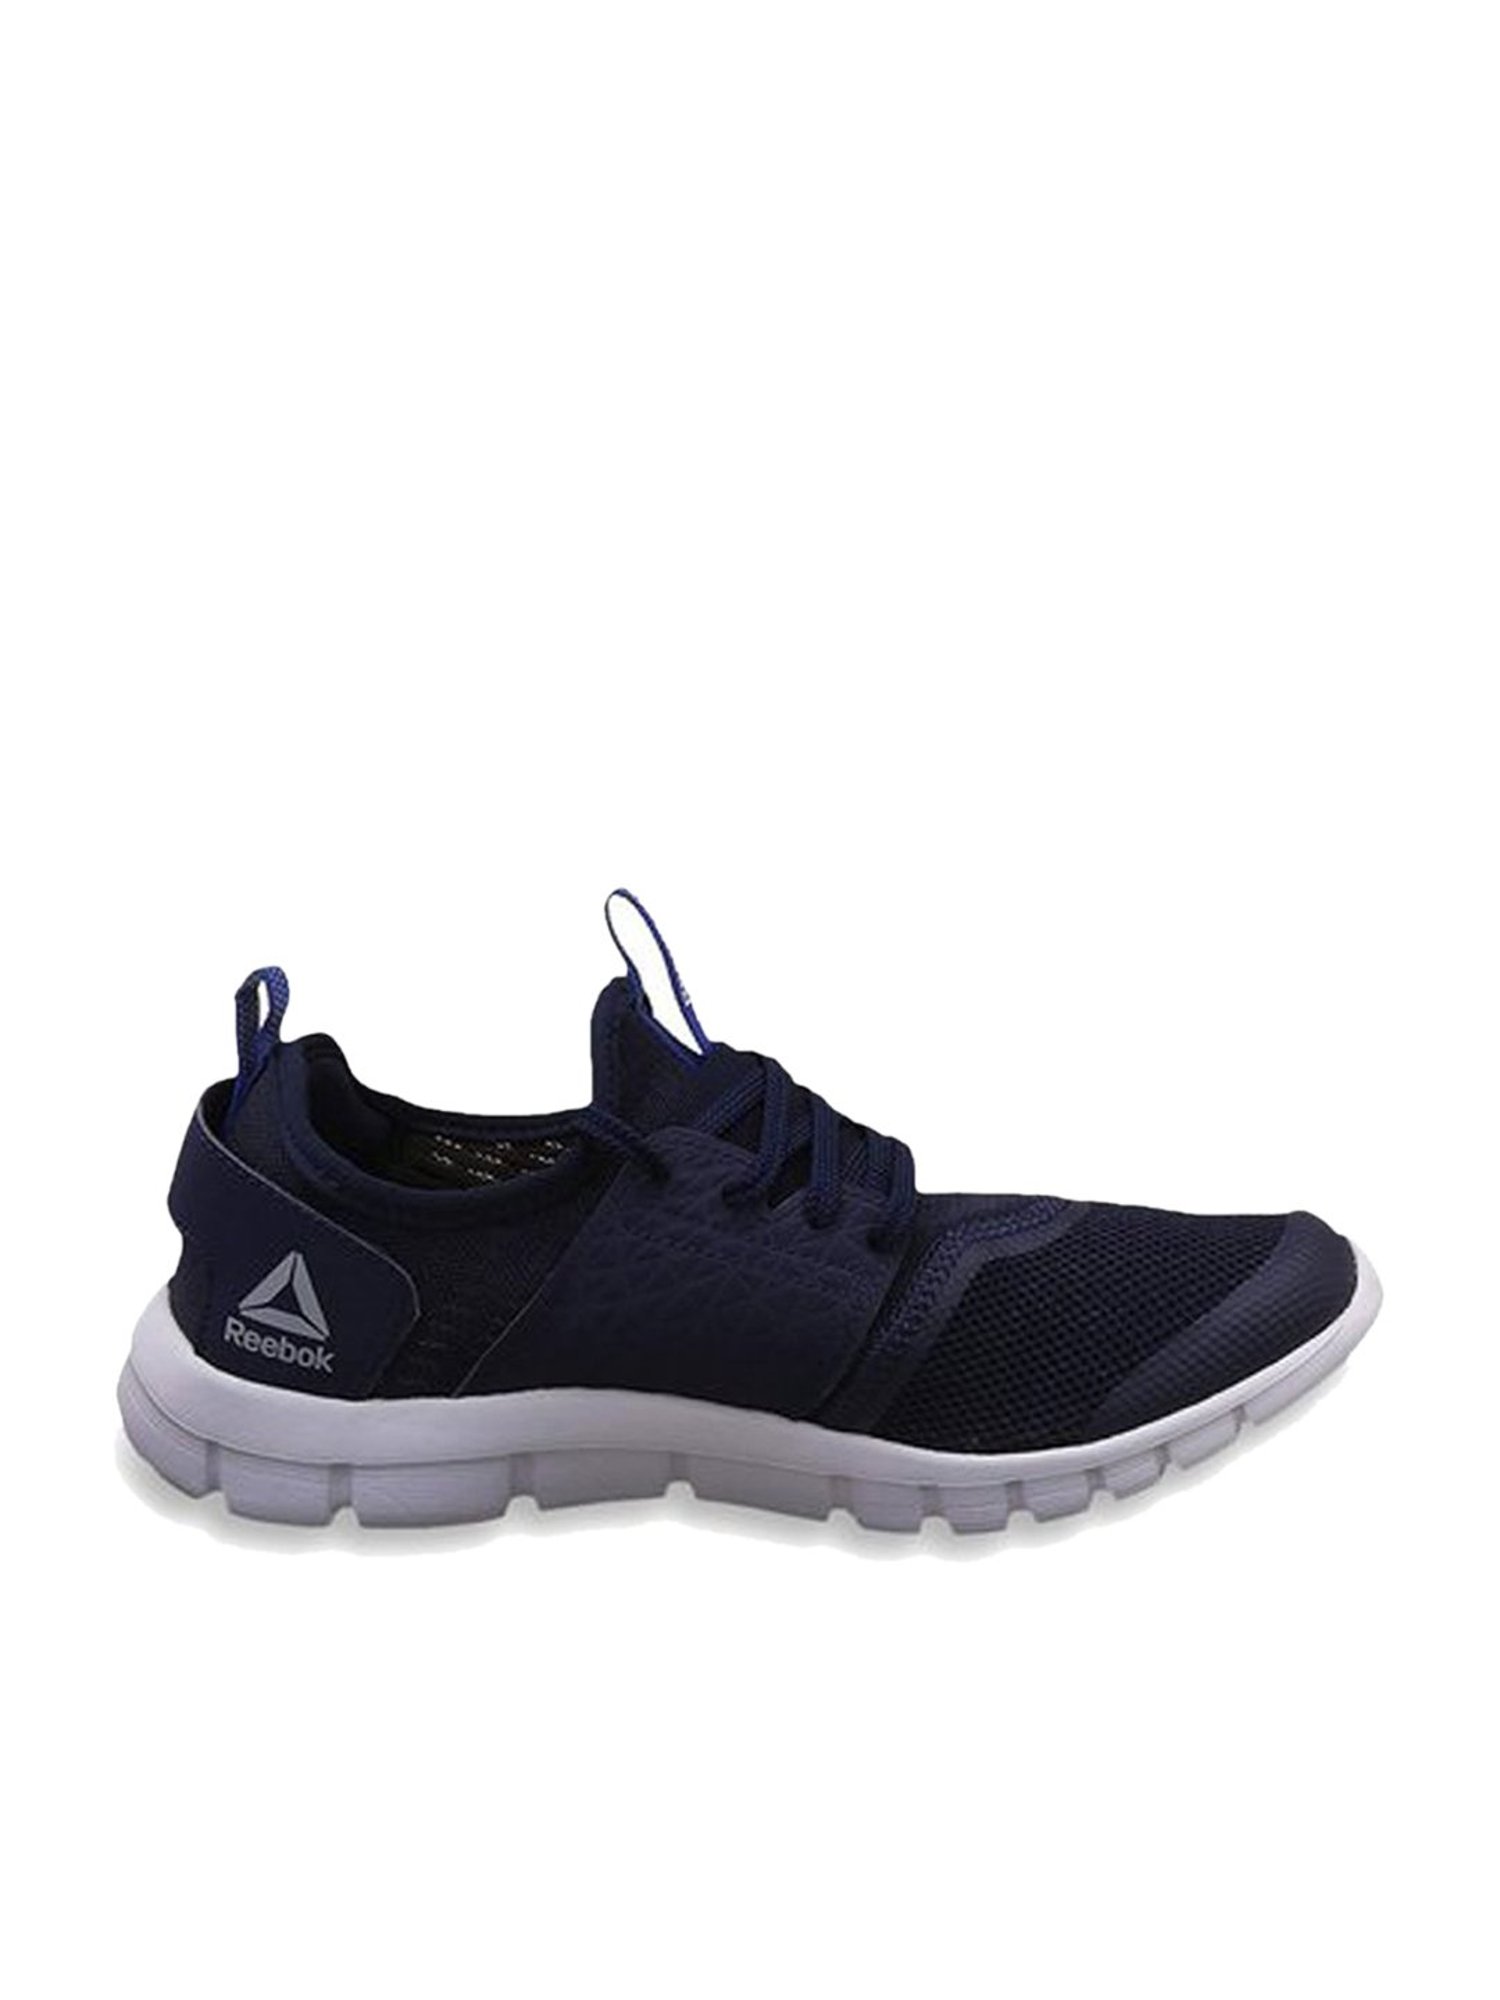 Buy Reebok Navy Running Shoes for Men 